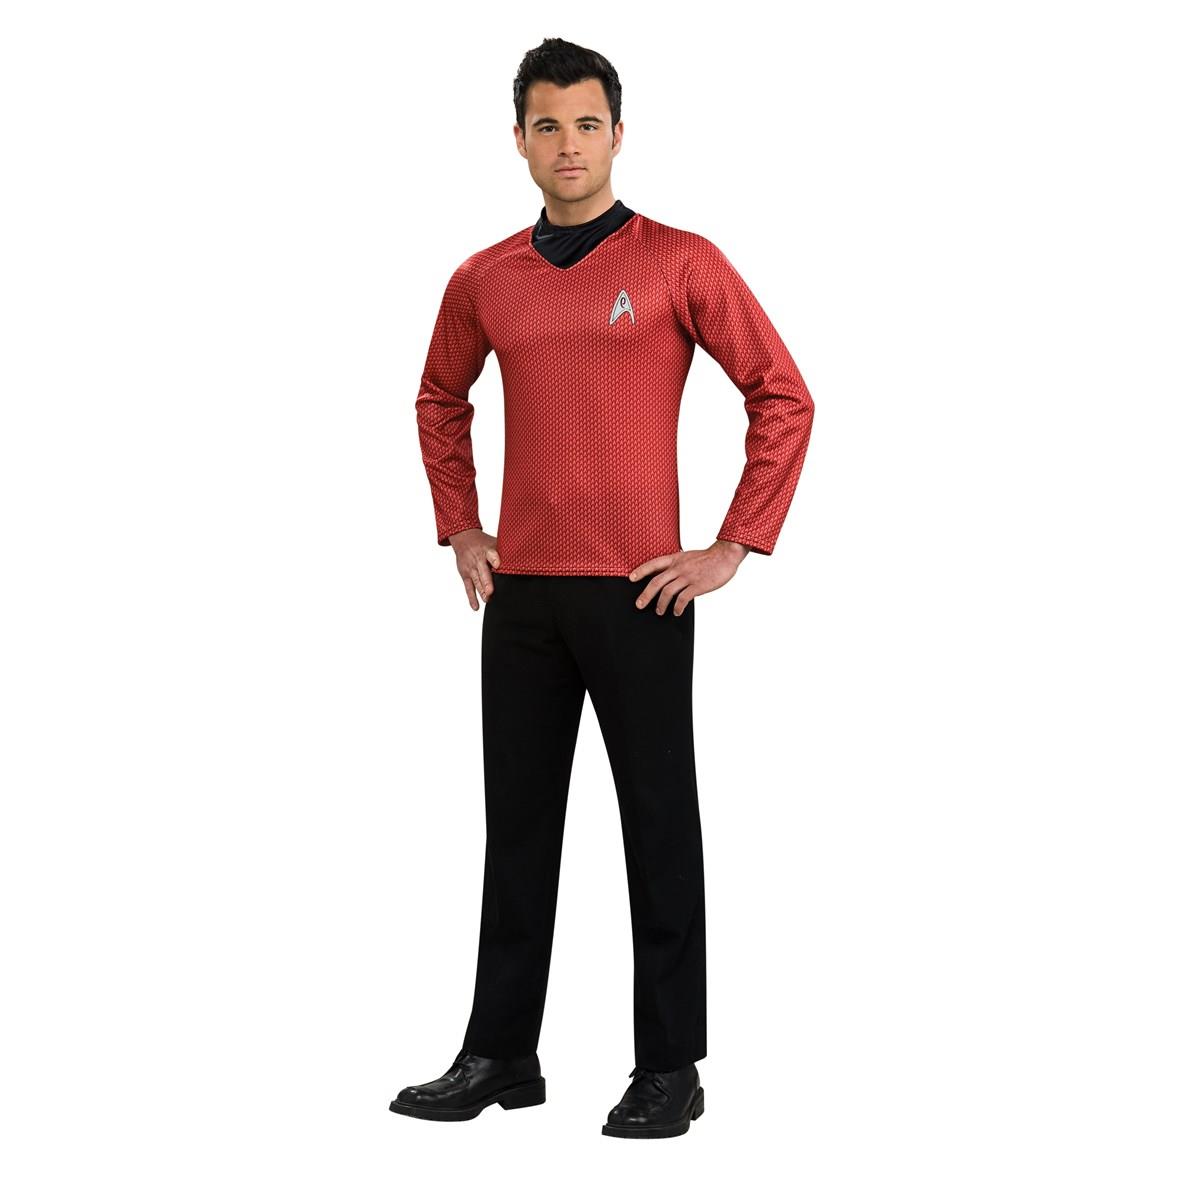 281177 Star Trek Movie 2009 - Red Shirt Adult Costume - Small